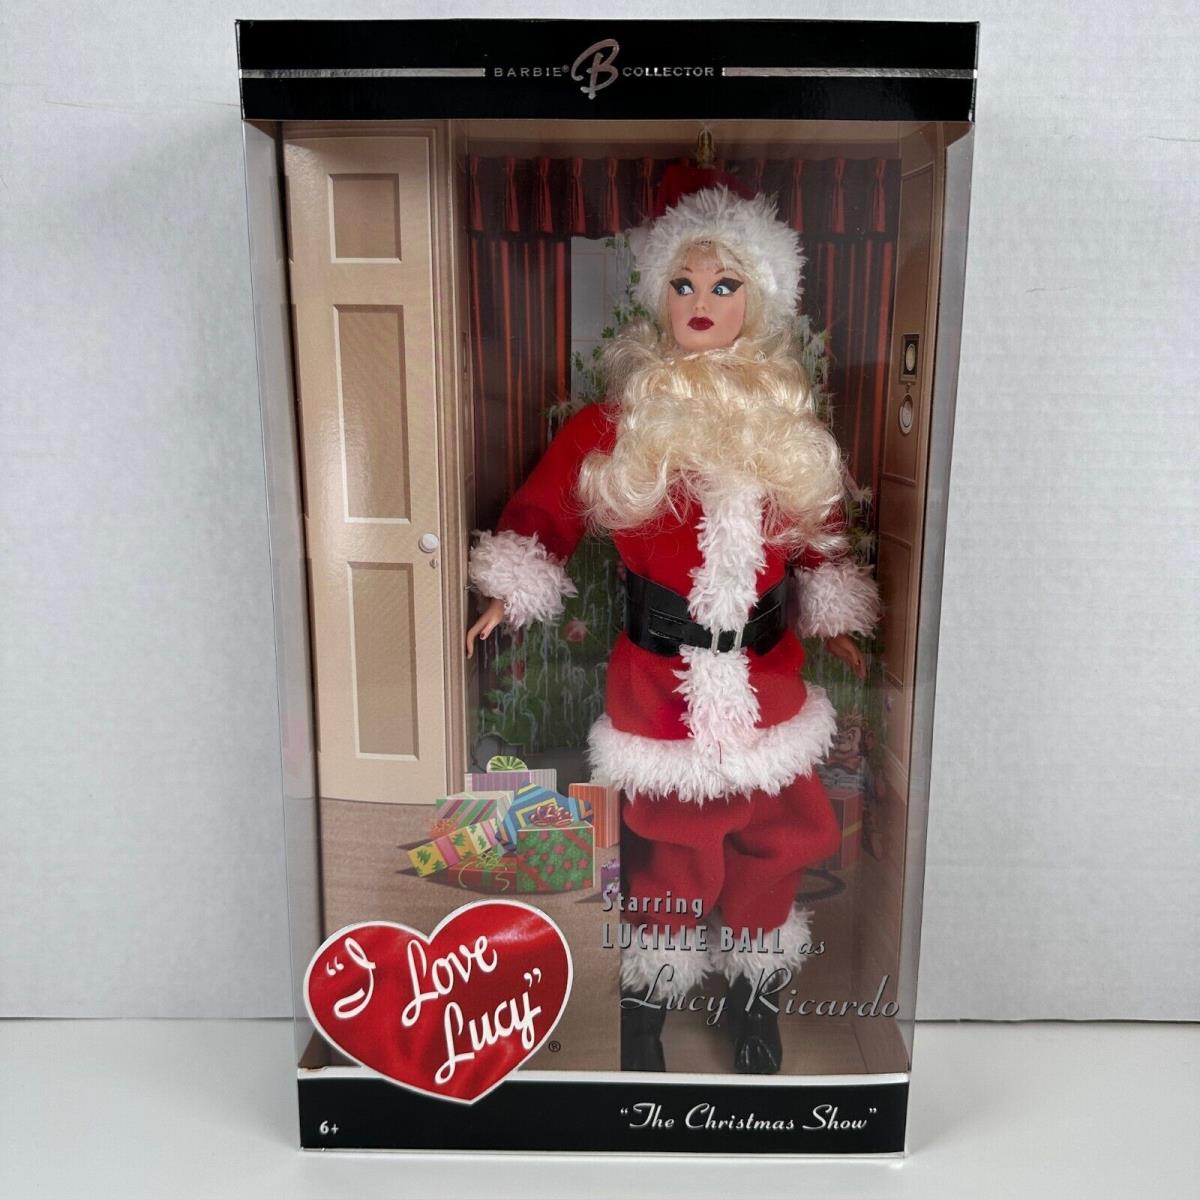 The Christmas Show Lucille Ball I Love Lucy Ricardo Barbie Mattel 2006 K4558